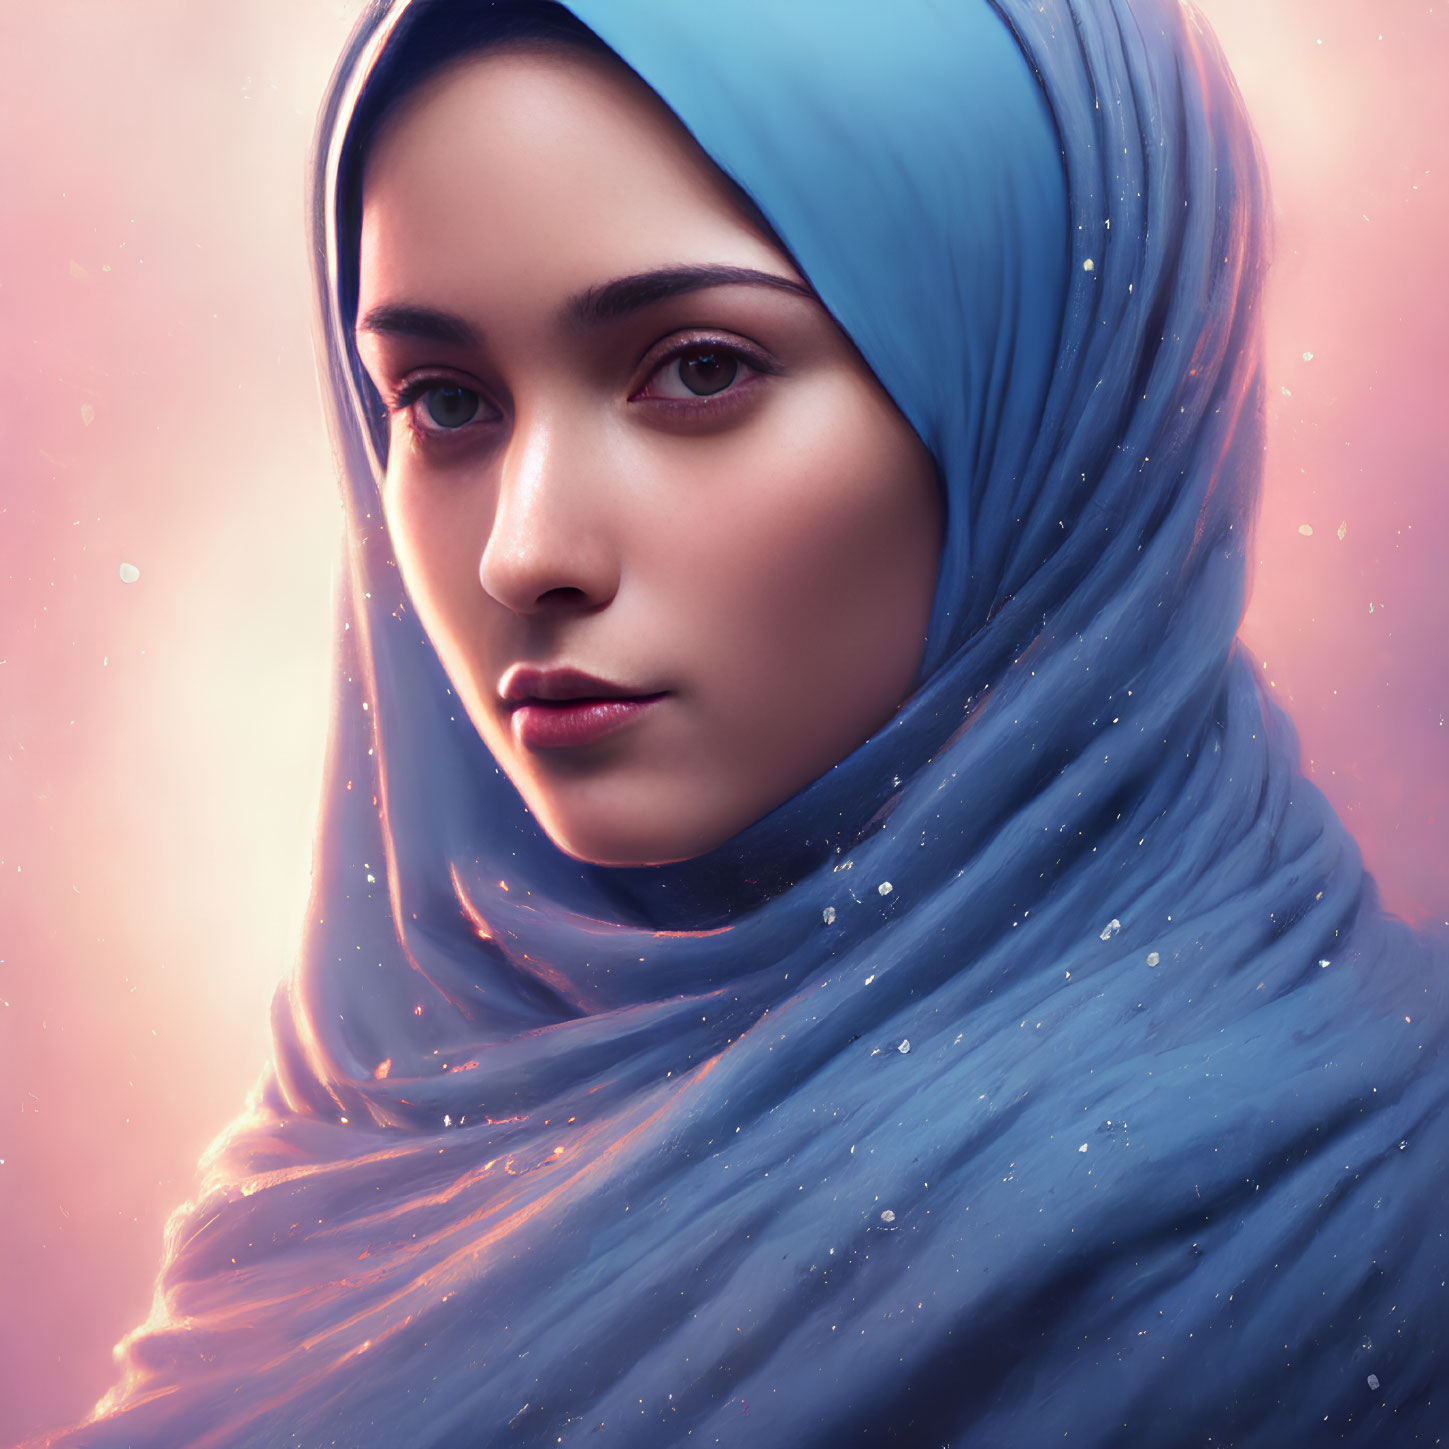 Digital portrait of woman in blue headscarf on pink background